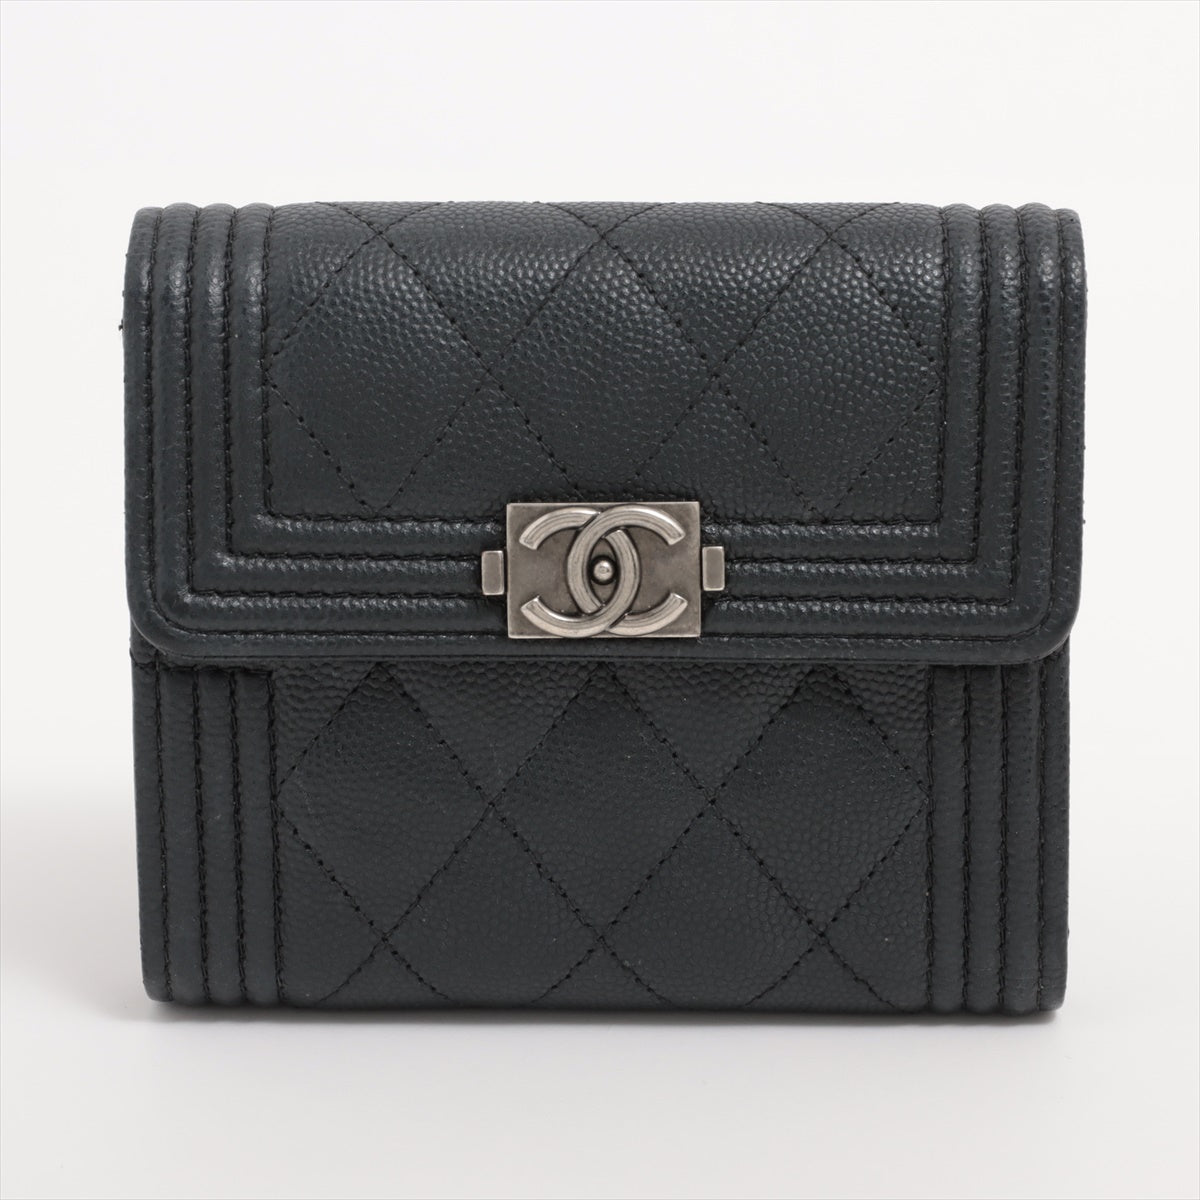 Chanel Boy Chanel Caviarskin Compact Wallet threefold Black Silver Metal fittings 31st